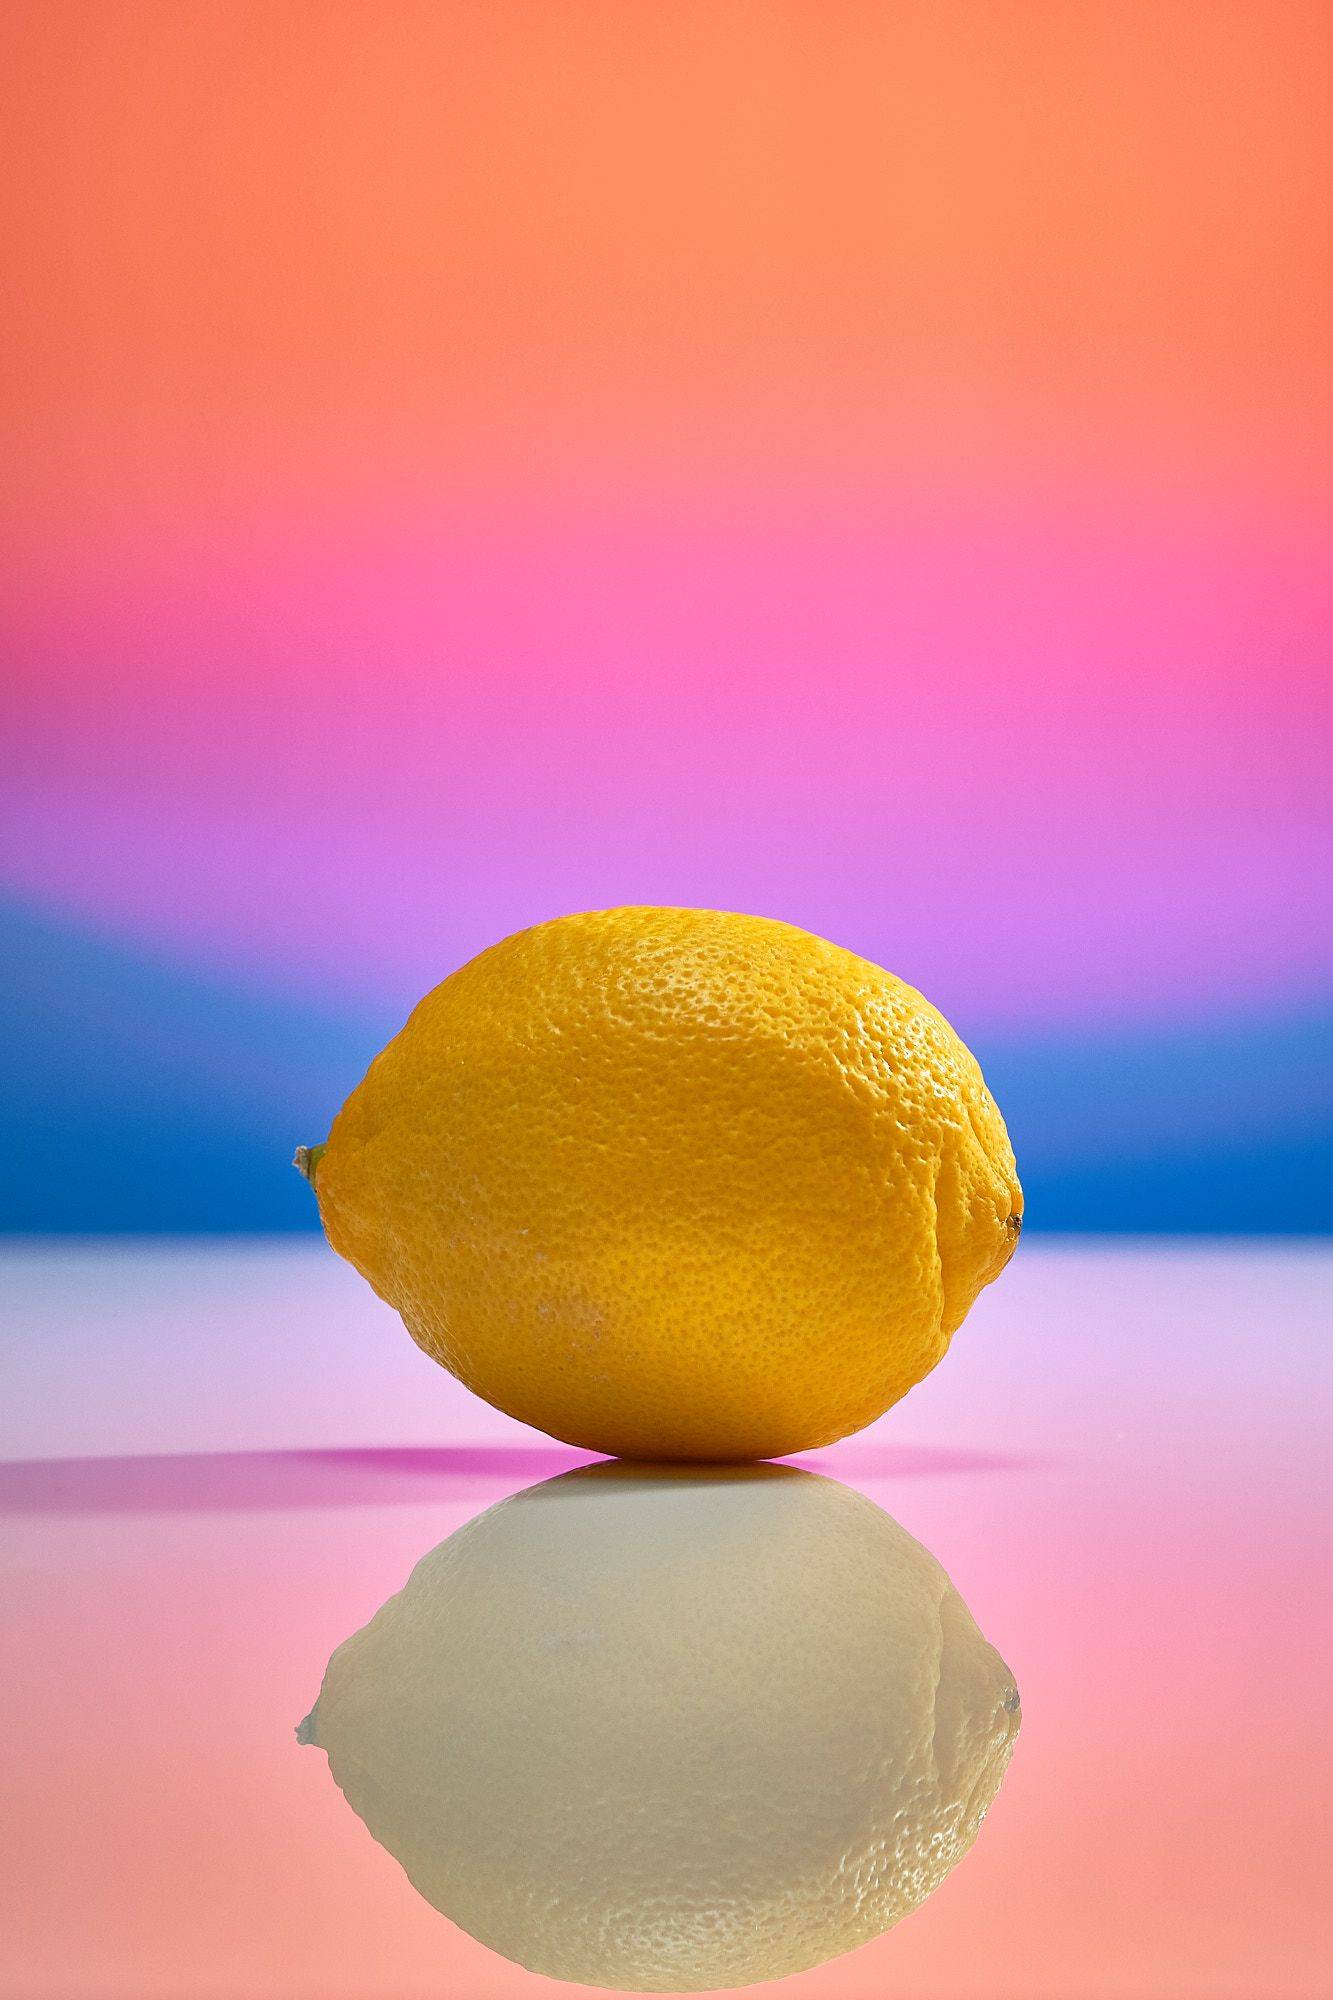 a fresh lemon on rainbow colored background